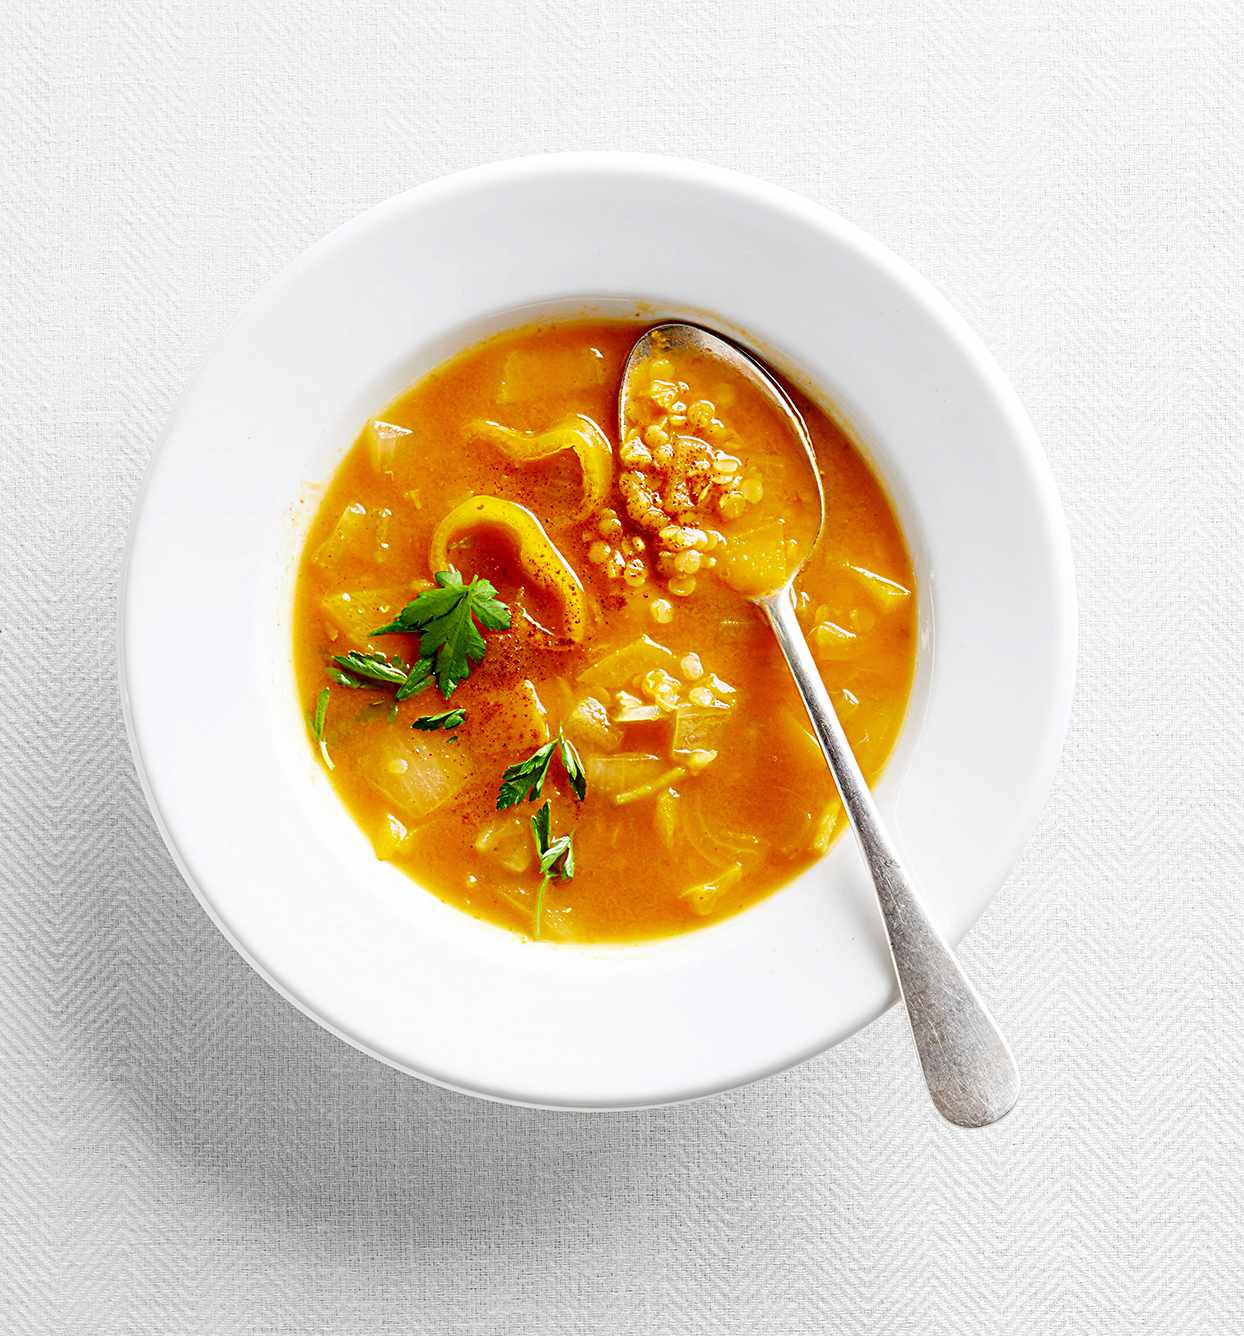 30-Minute Dinner: Pumpkin Soup with Lentils